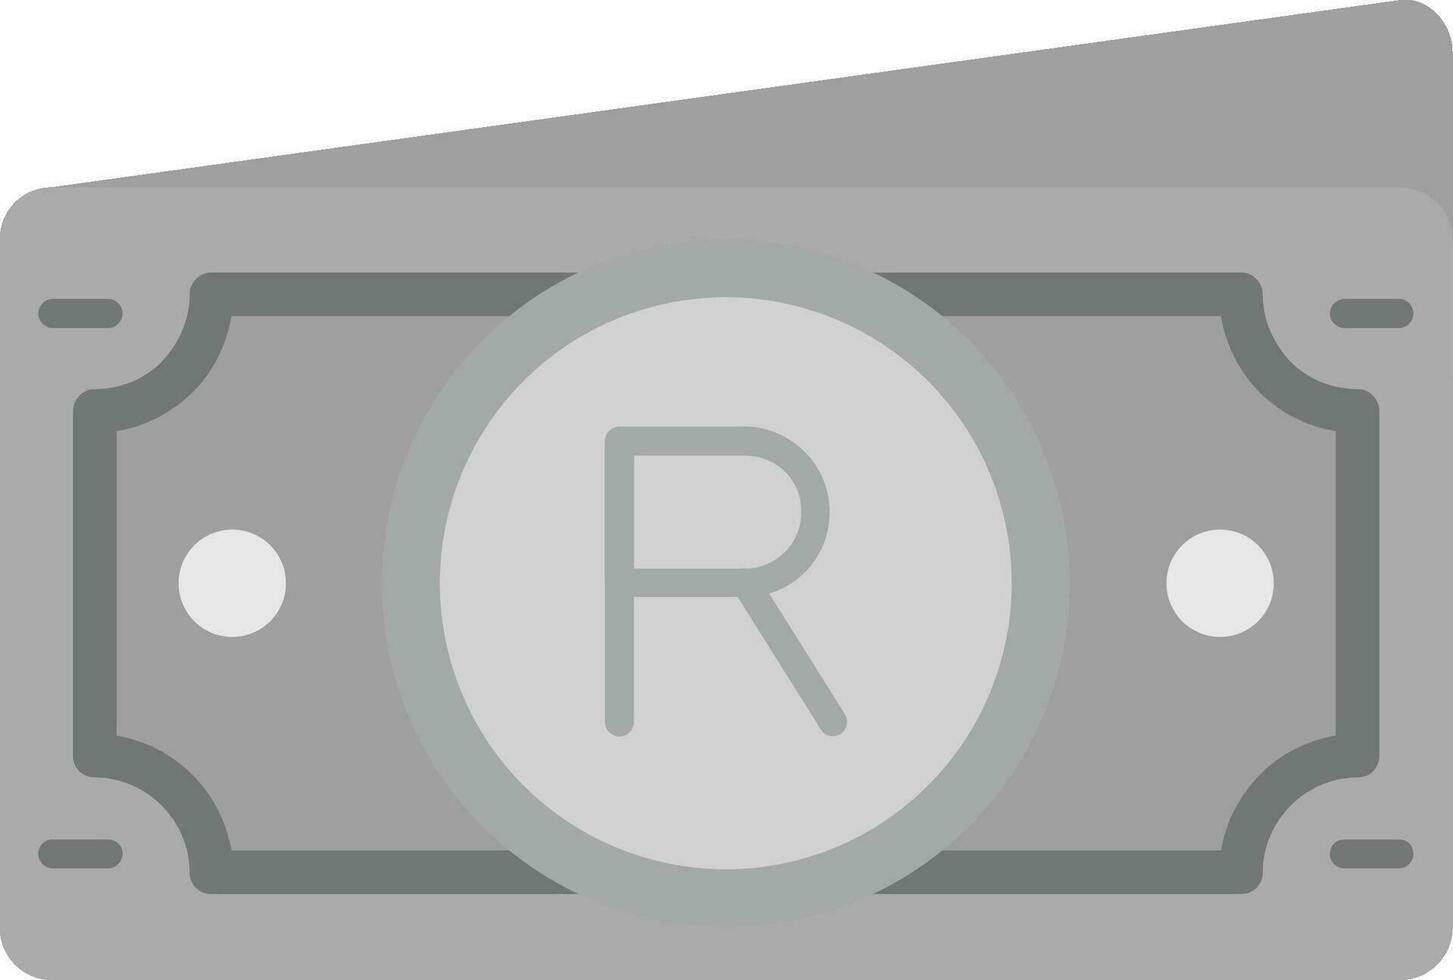 Rand Grey scale Icon vector